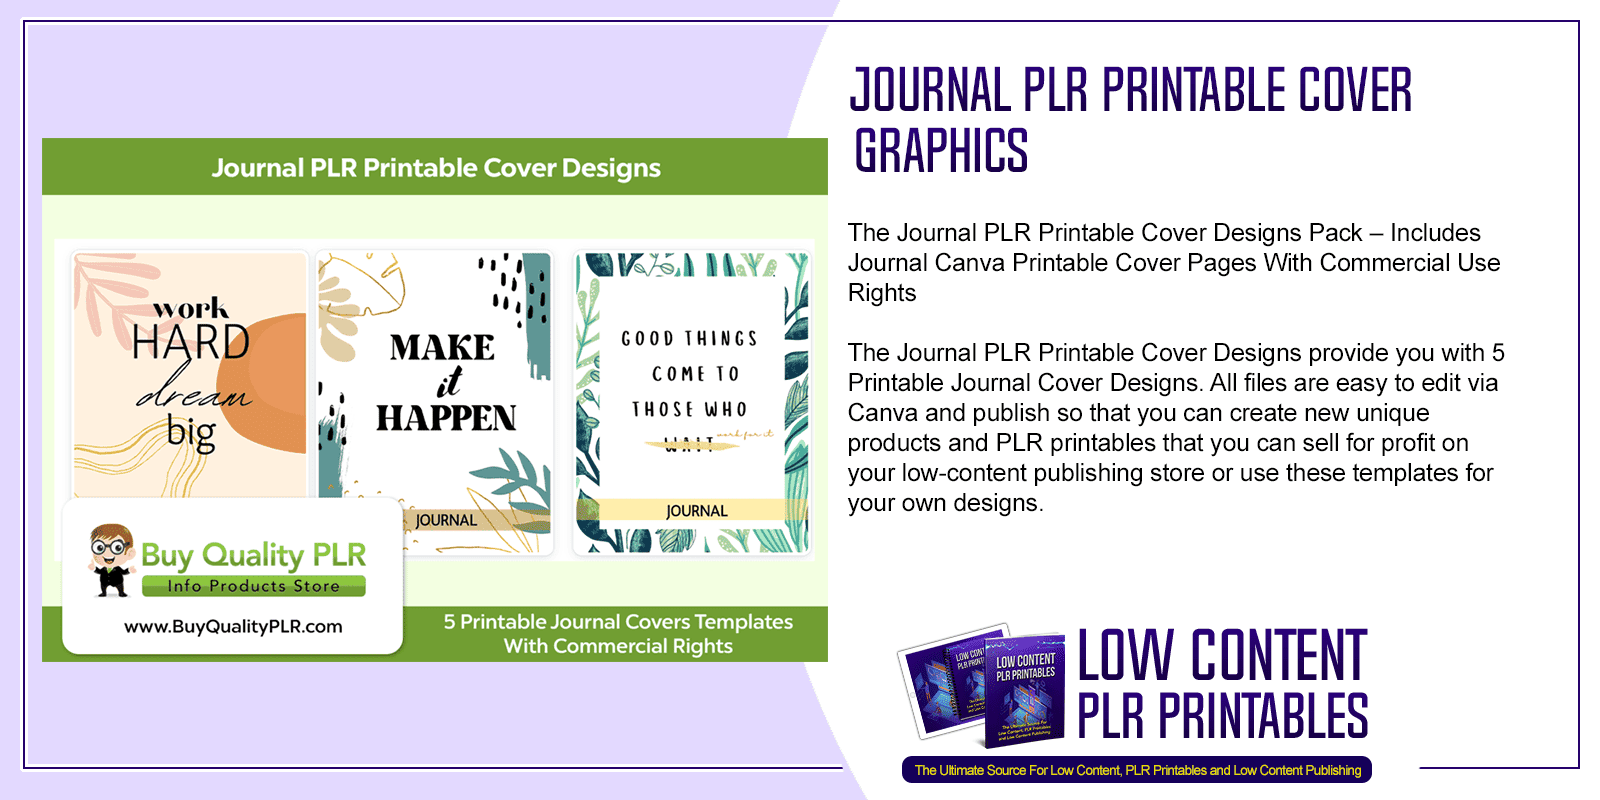 Journal PLR Printable Cover Graphics